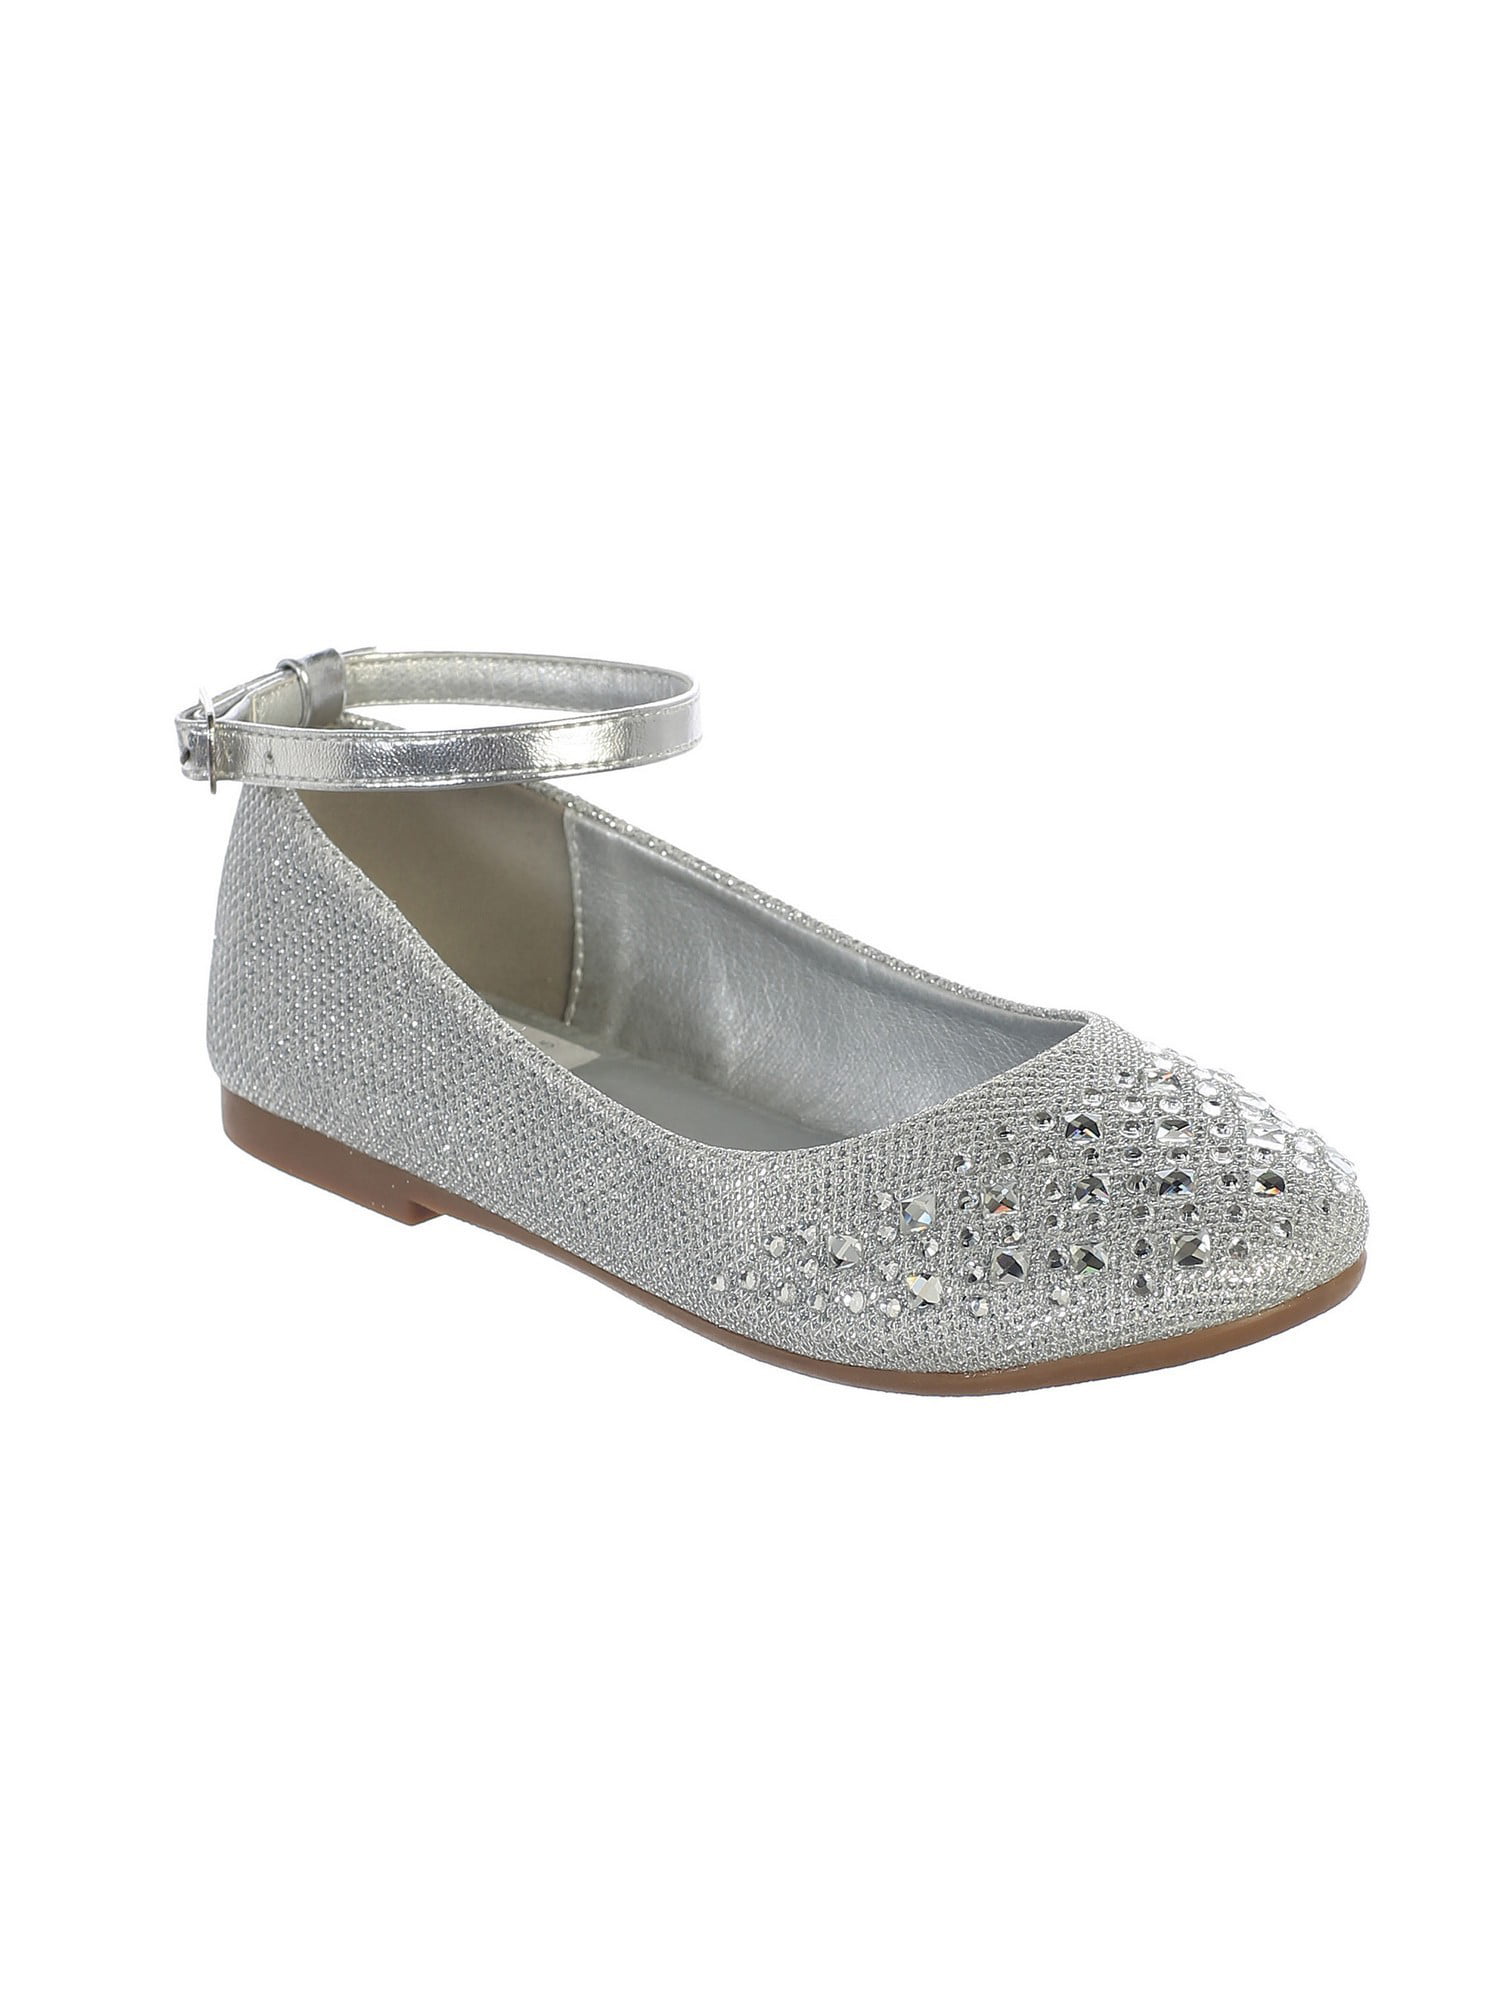 girls silver dress shoes